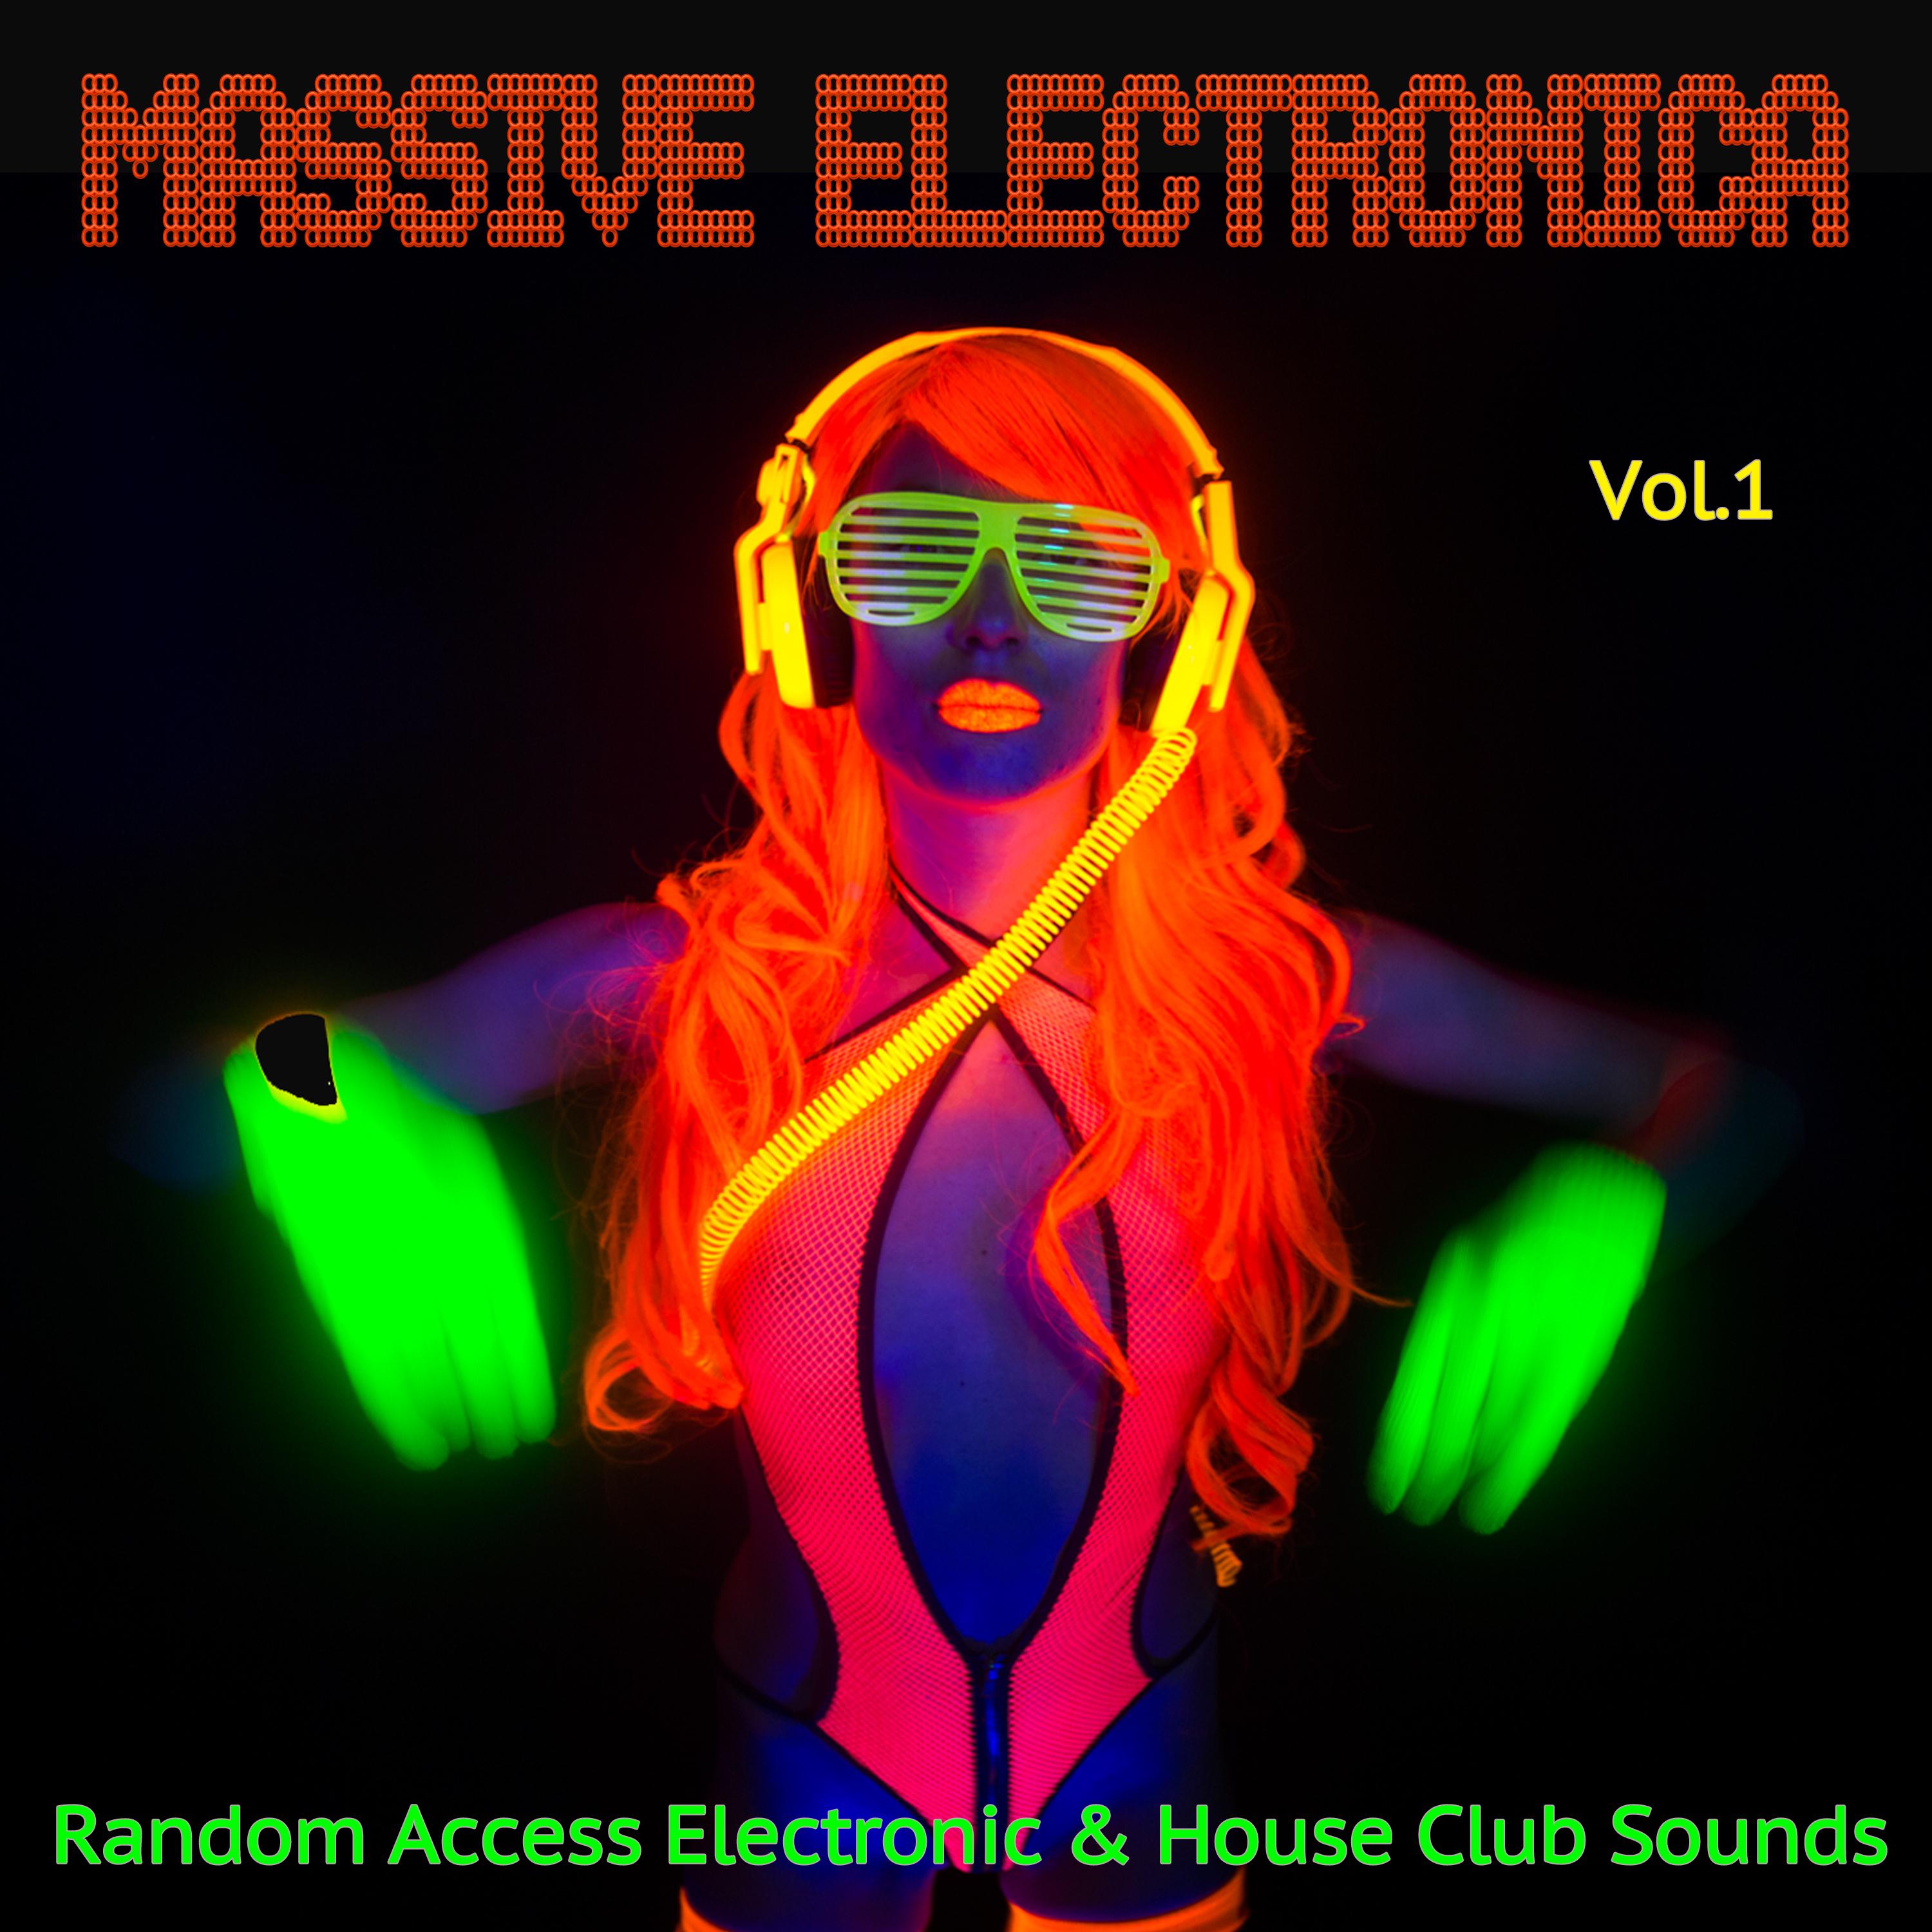 Massive Electronica, Vol. 1 - Random Access Electronic & House Club Sounds